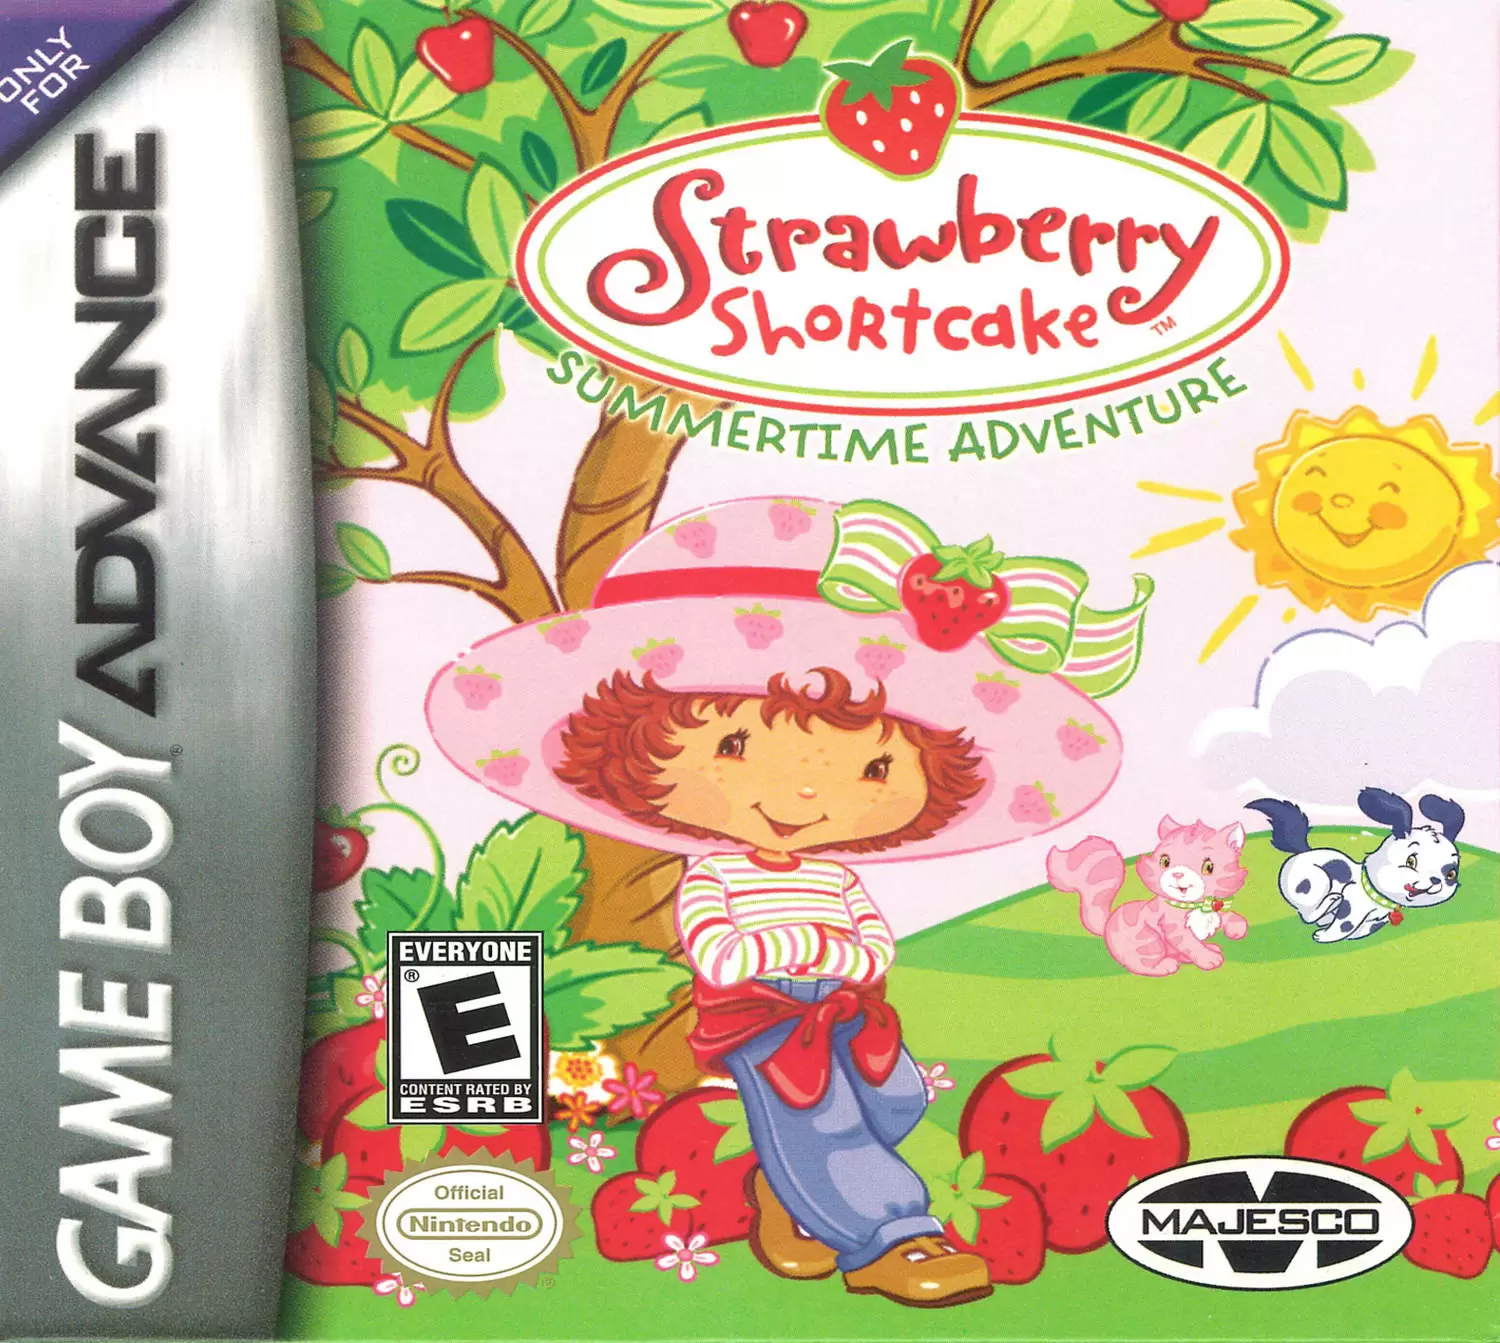 Game Boy Advance Games - Strawberry Shortcake: Summertime Adventure